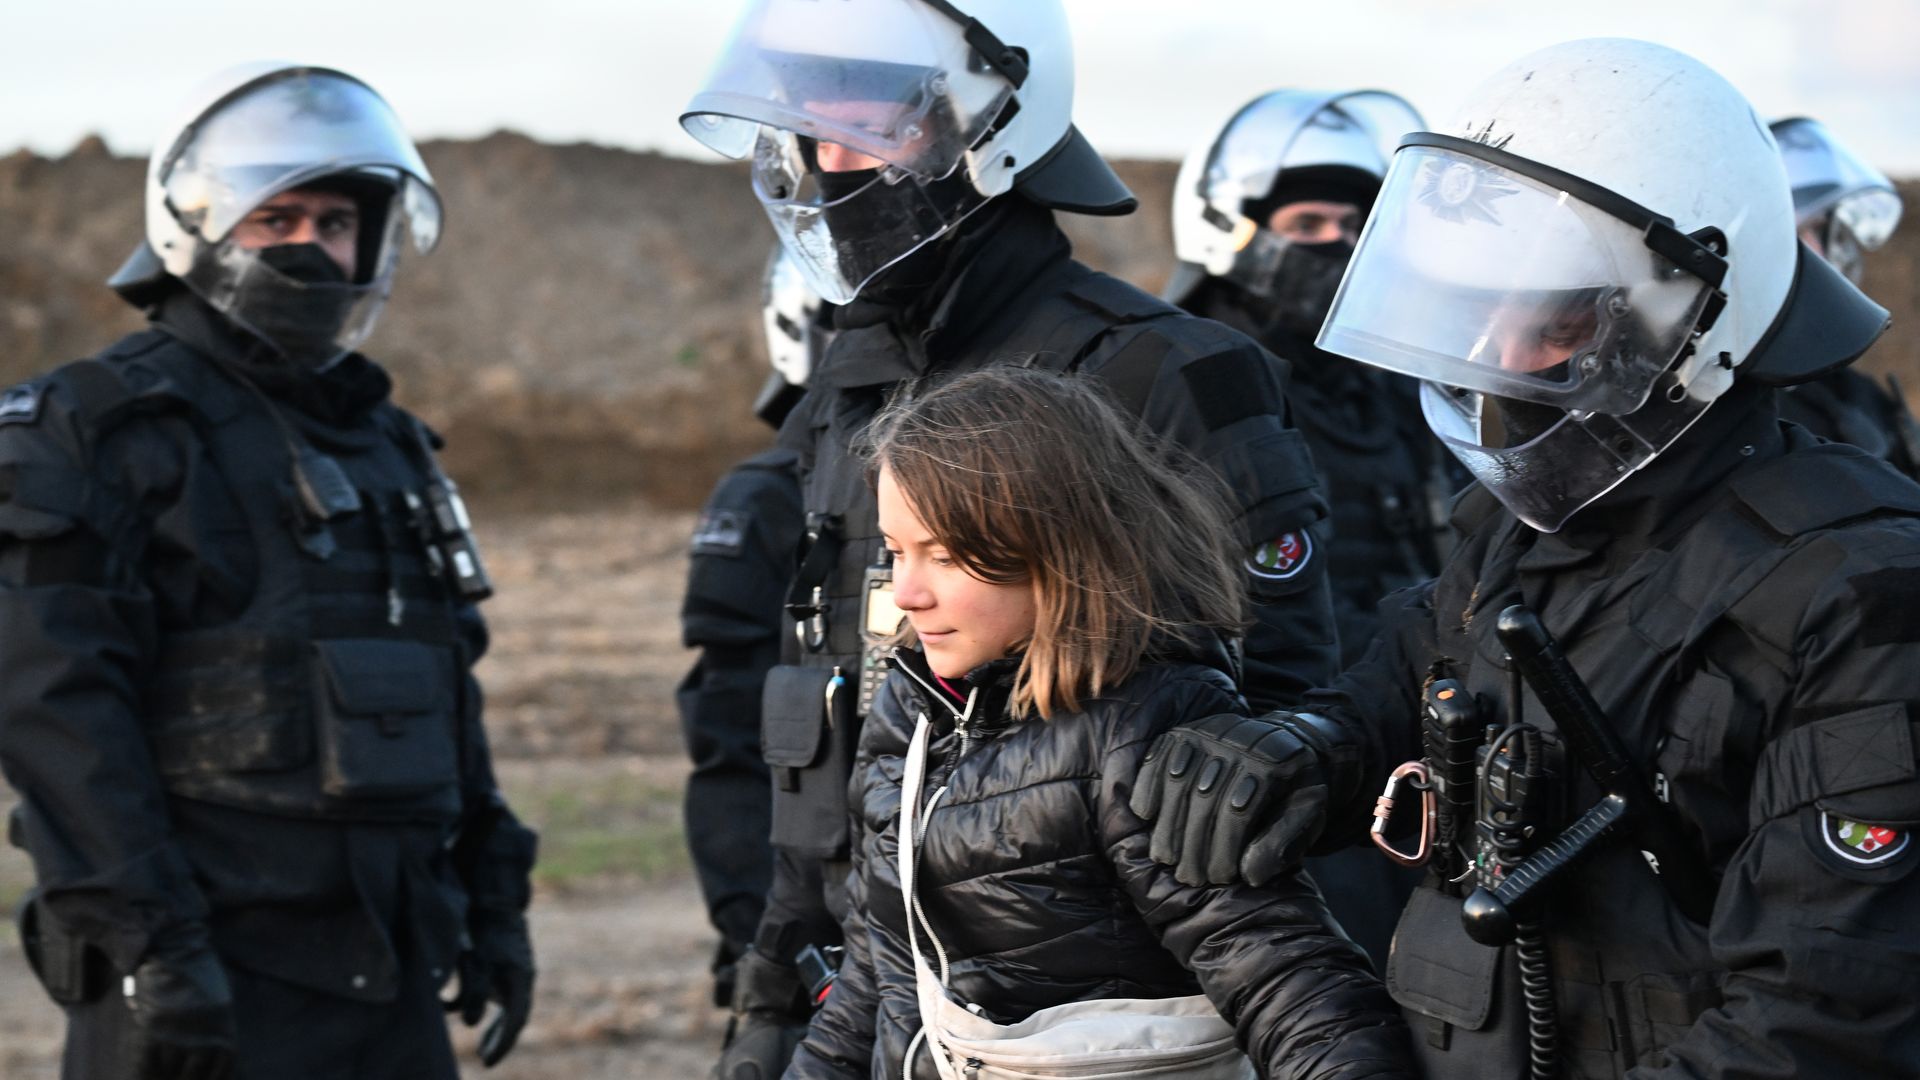 Greta Thunberg escorted by police